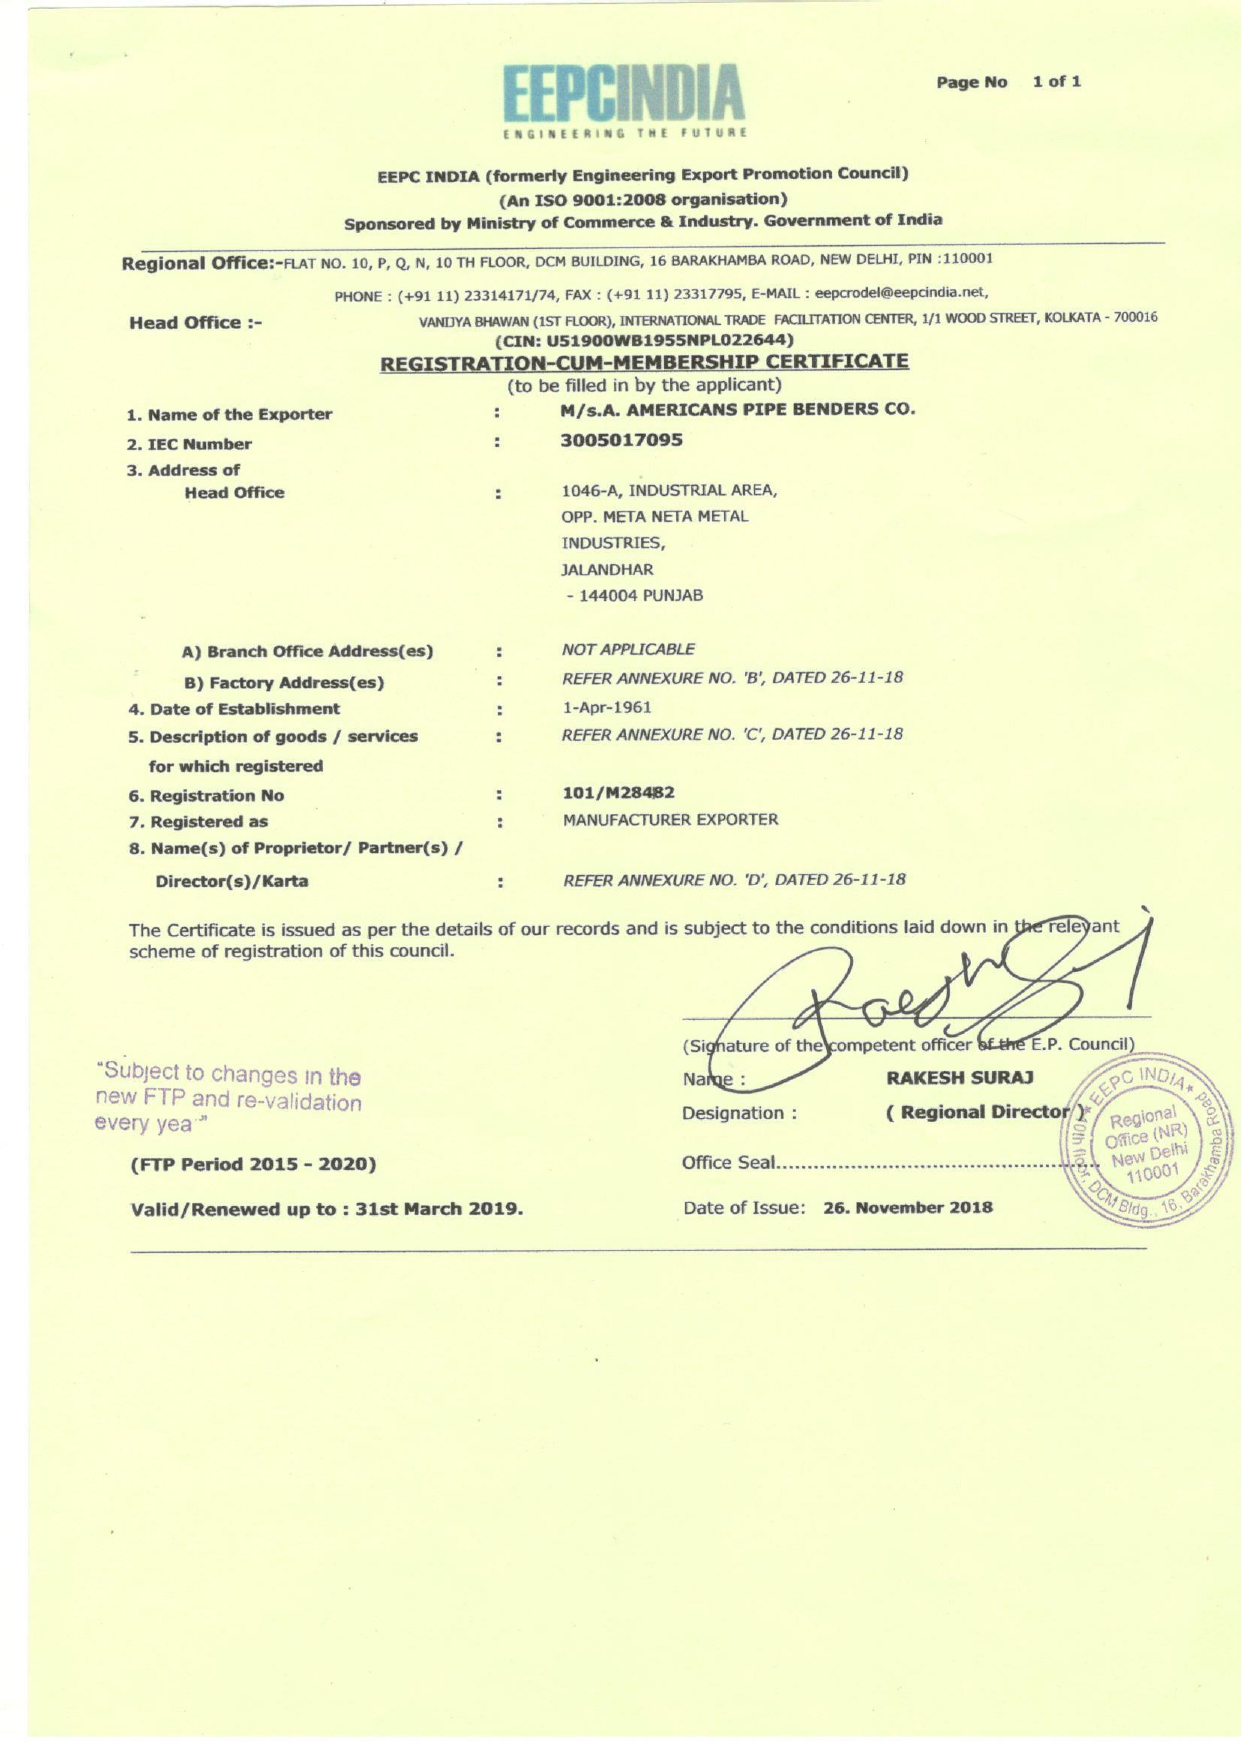 EEPC Indian Registration-Cum-Membership Certificate